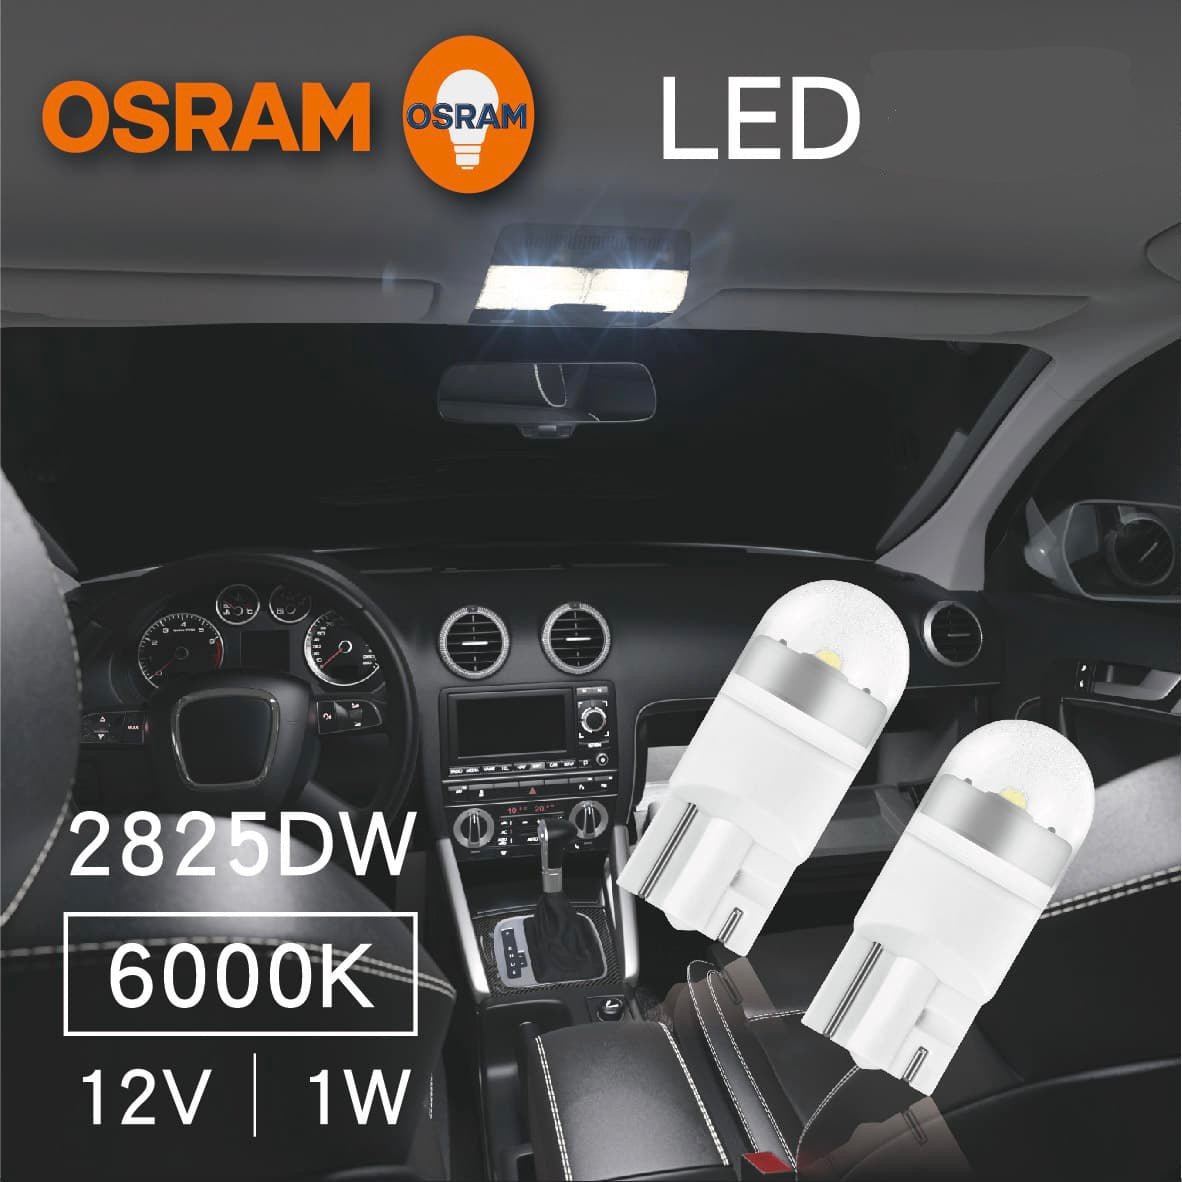 OSRAM หลอดไฟ LED ขั้วเสียบ T10 รุ่น SL Ease 2825DW